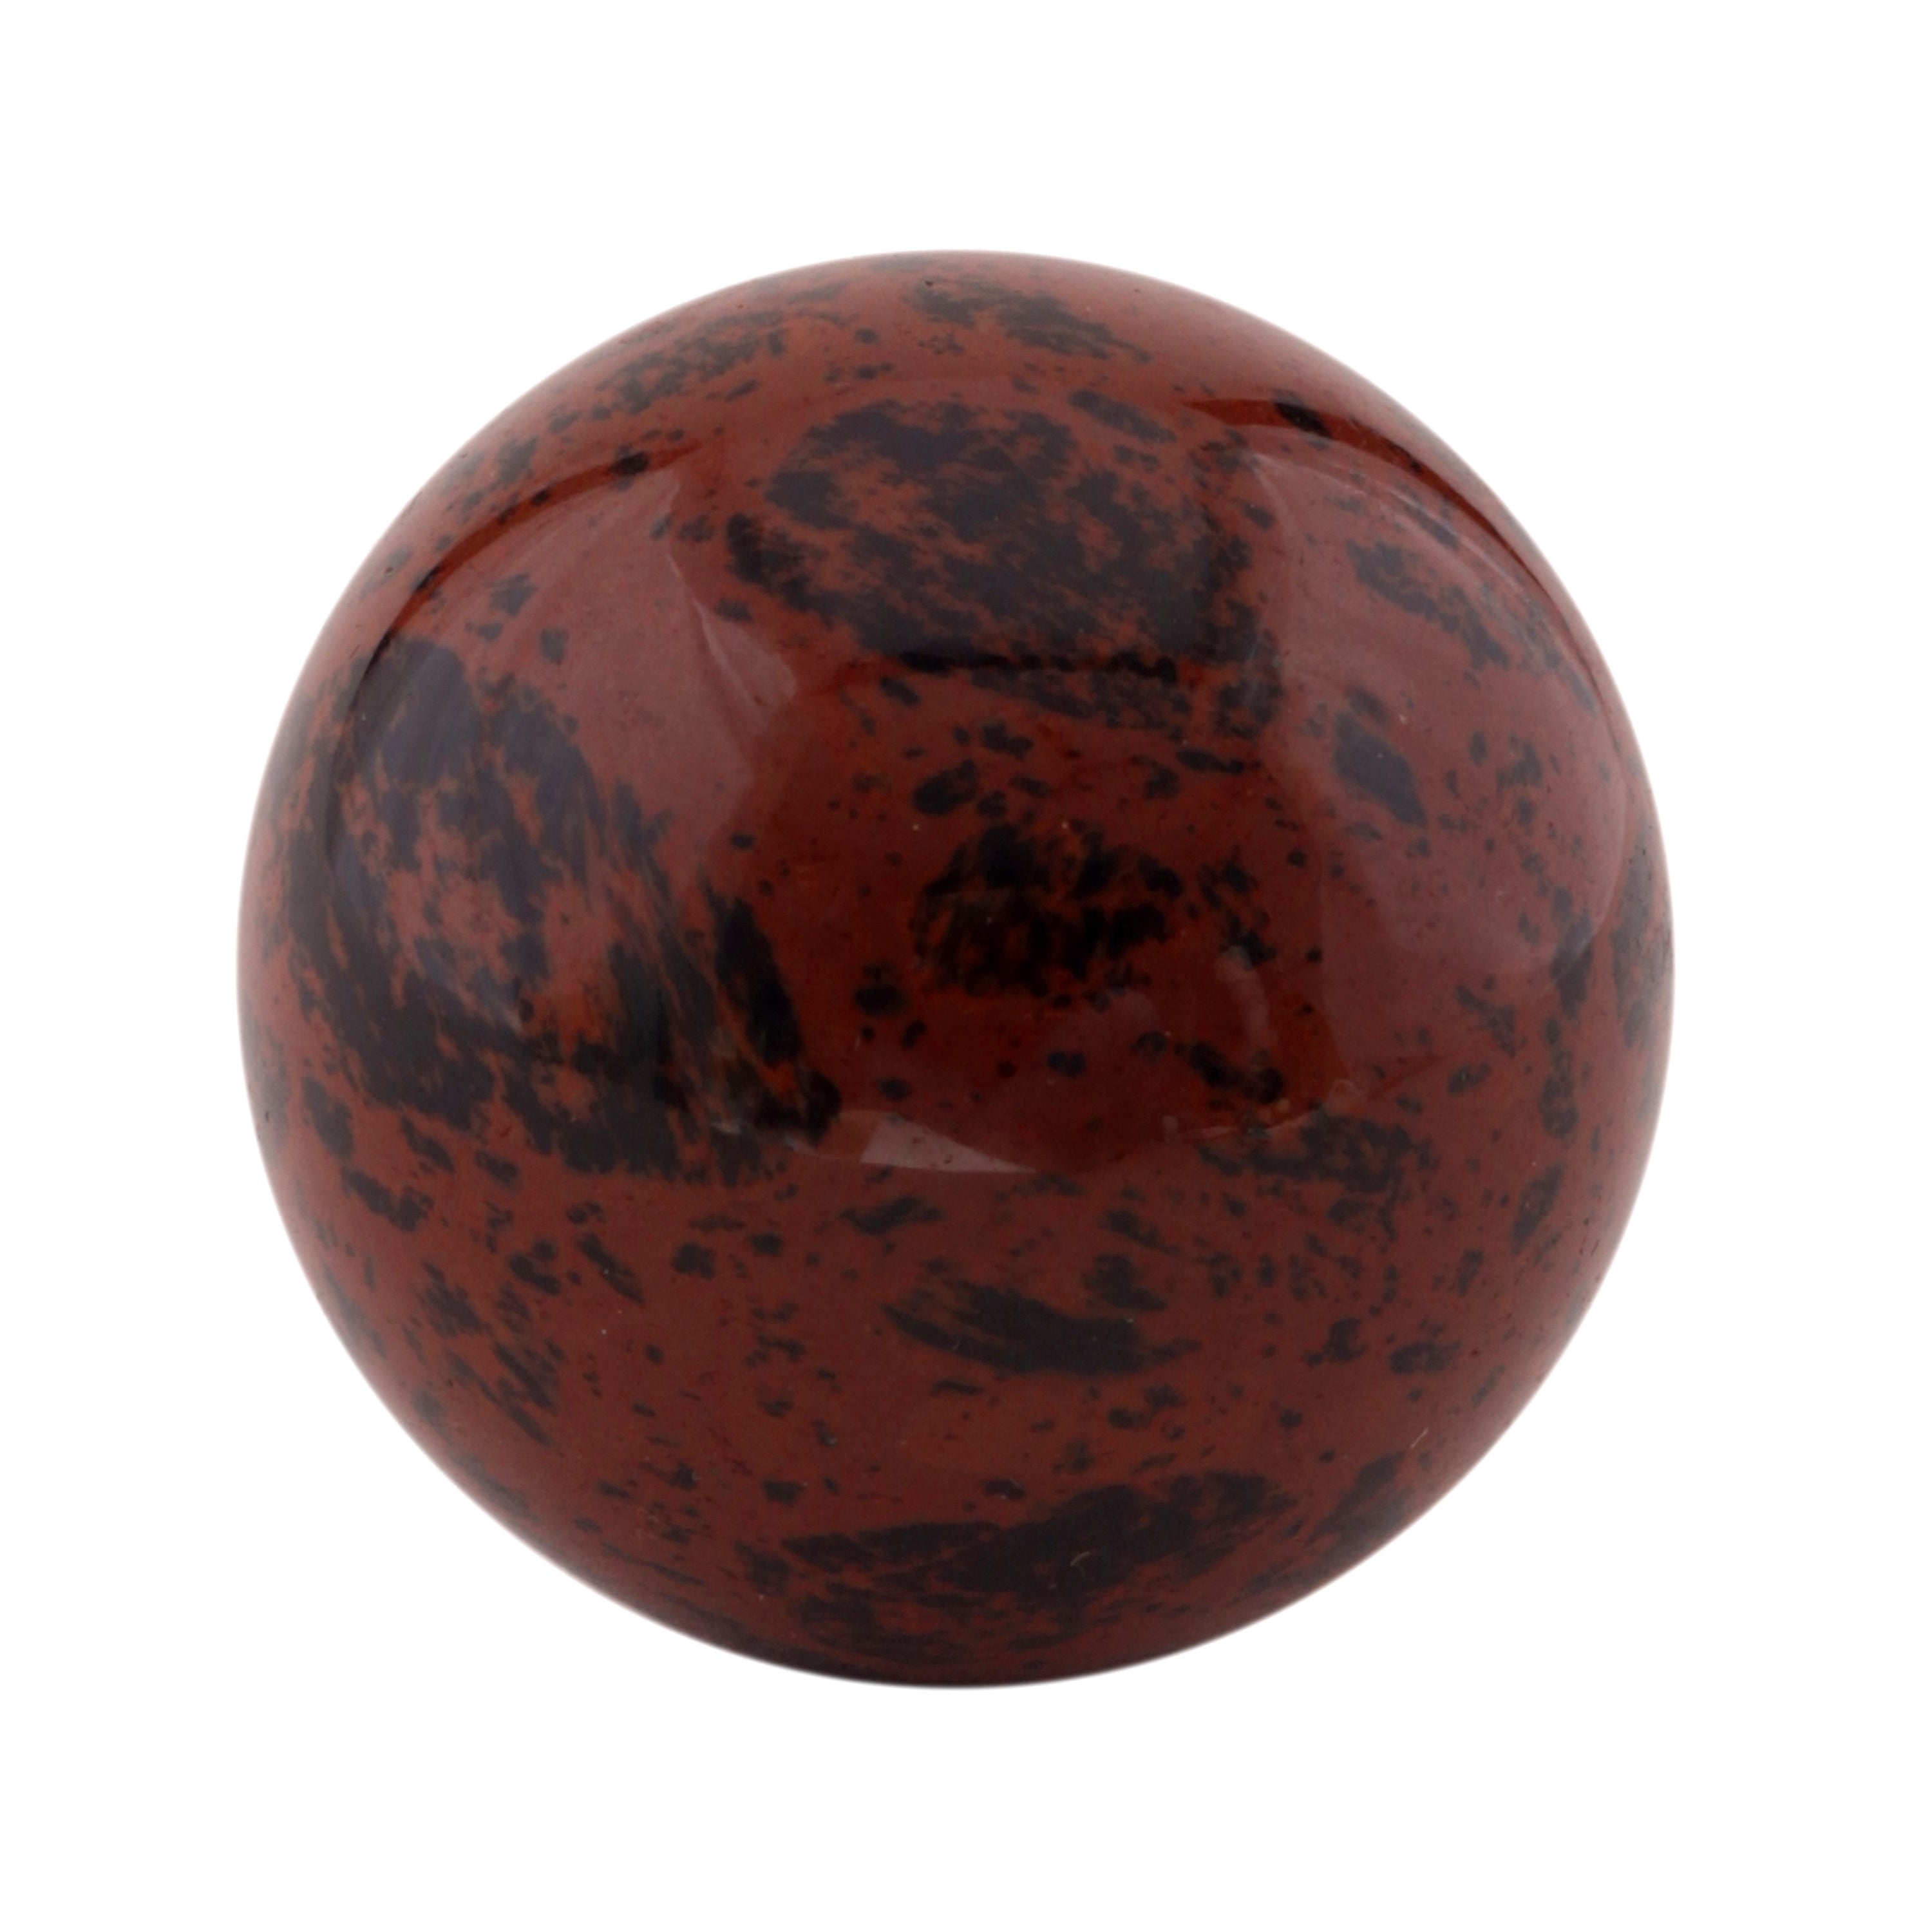 Healing Crystals - Mahogany Obsidian Sphere 40-50 MM